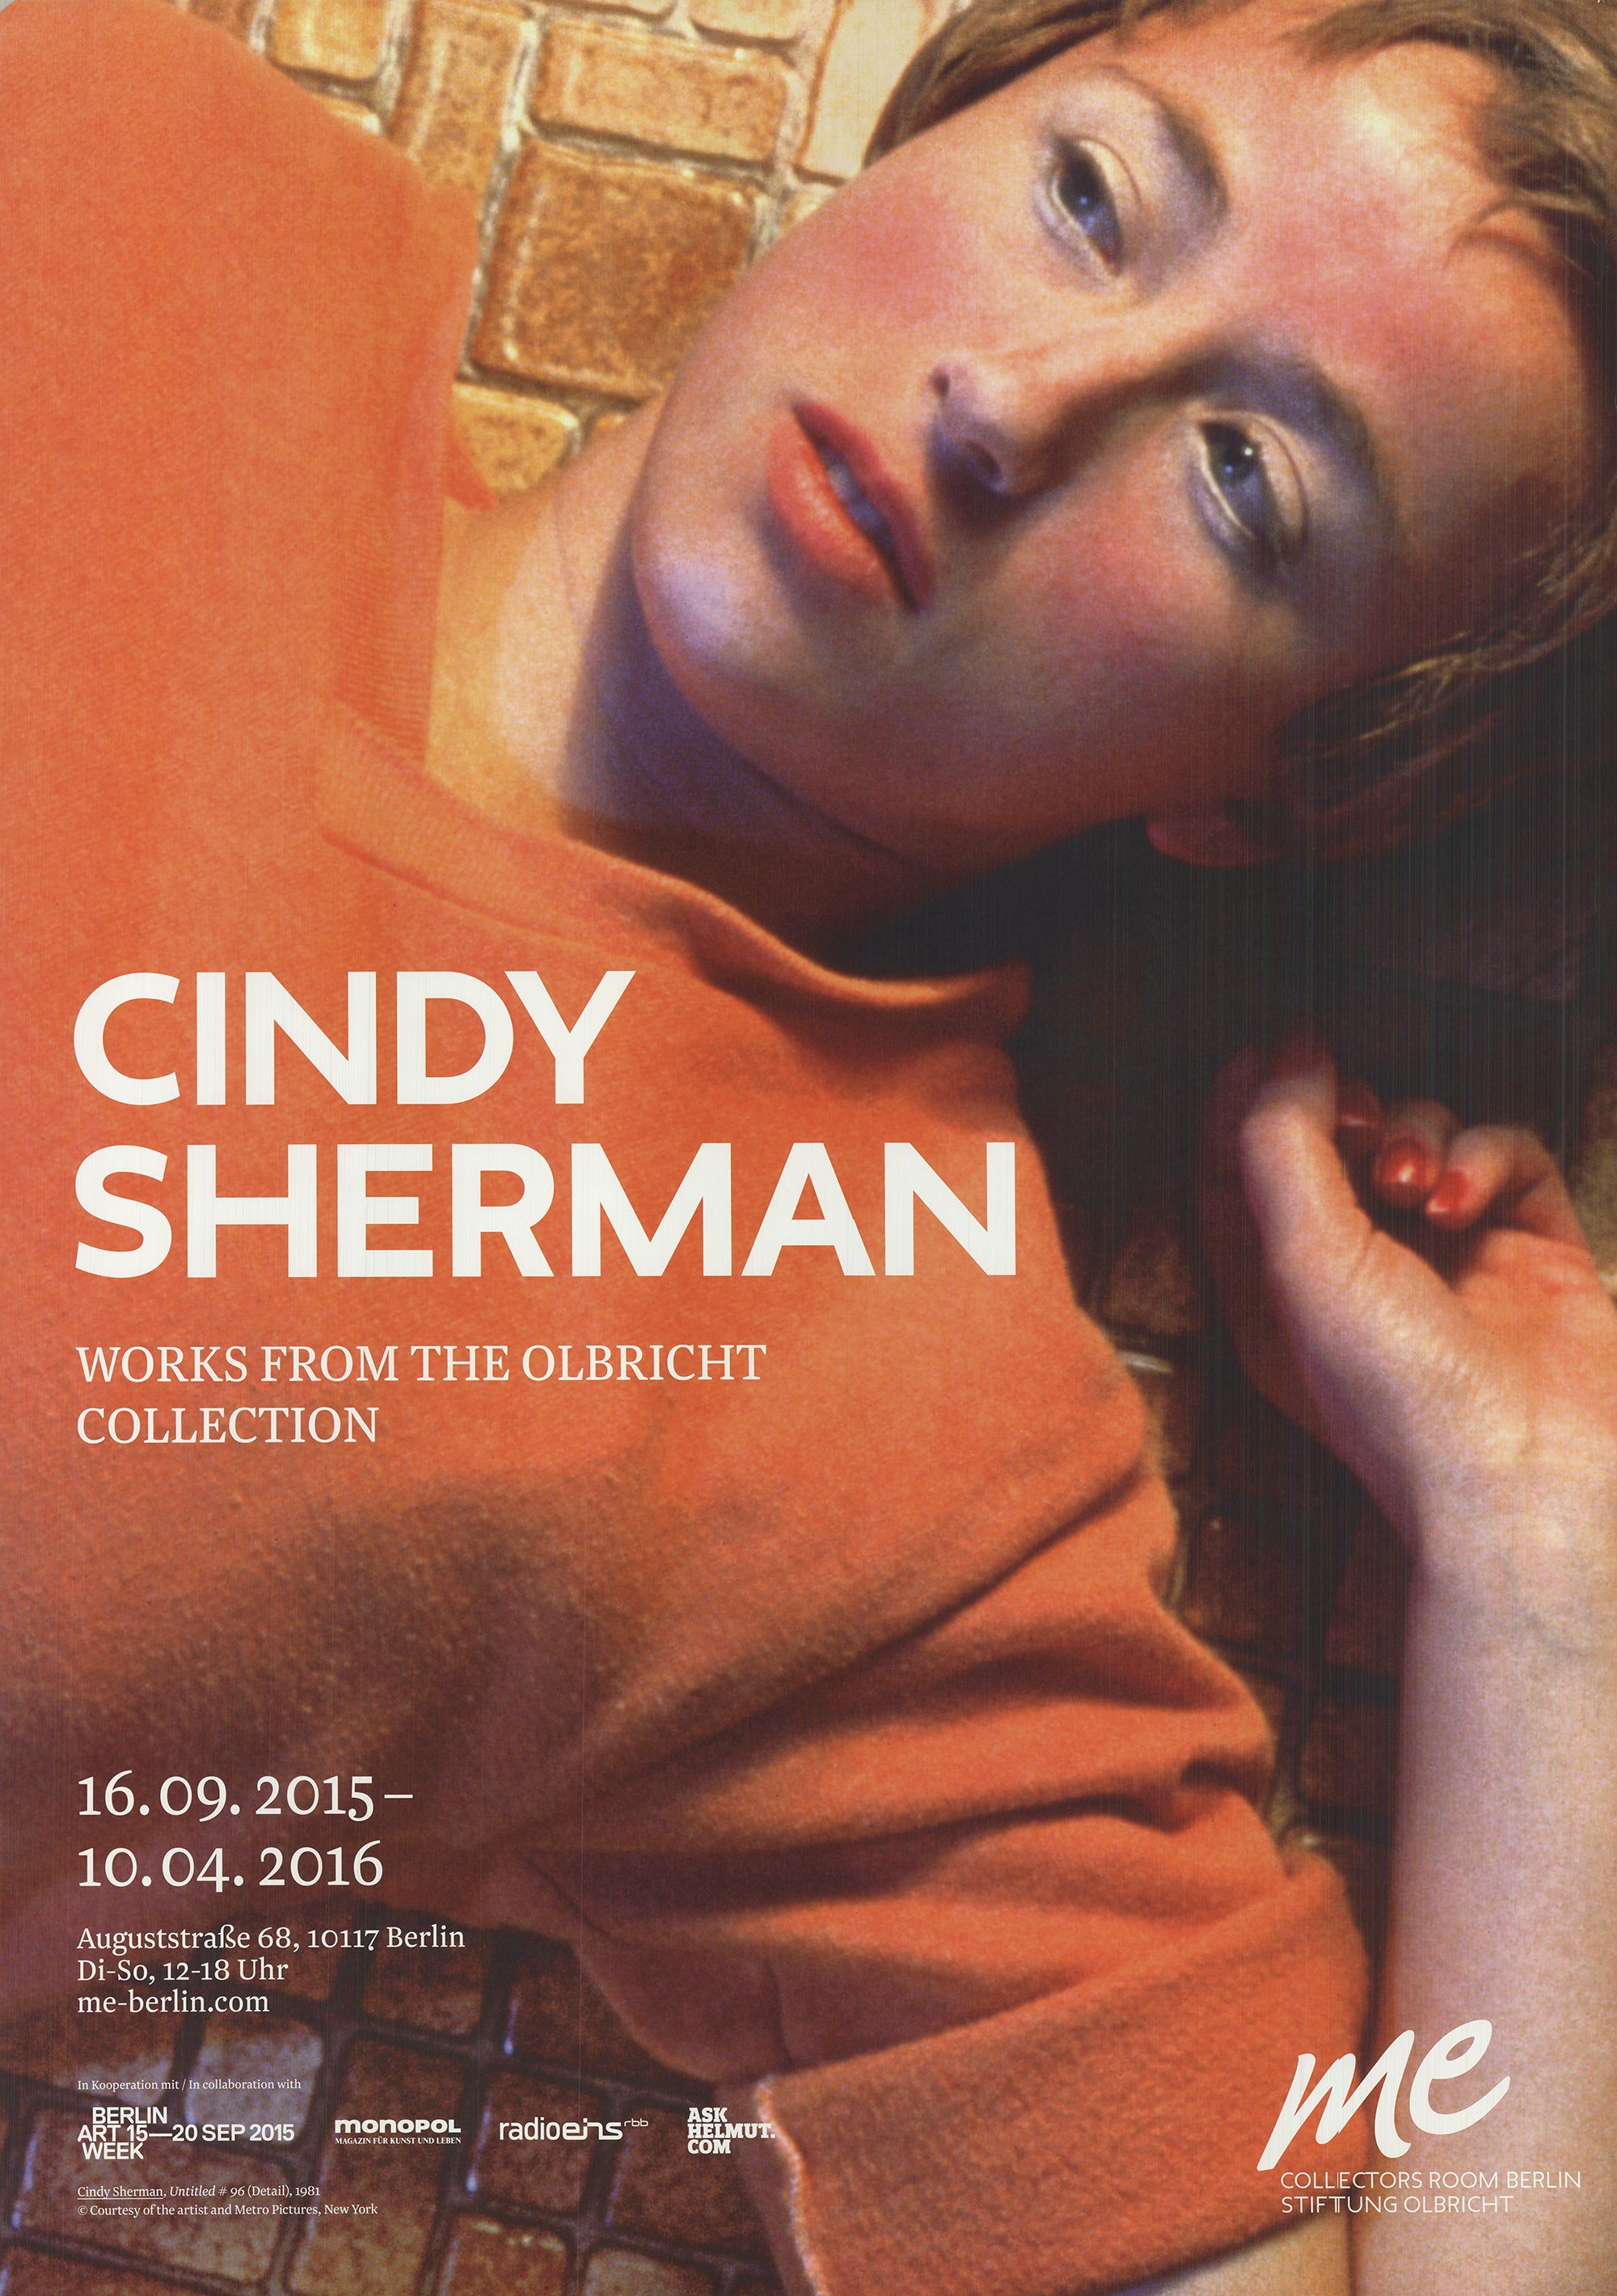 CINDY SHERMAN Untitled Film Still #10, 2016 – Art Wise Premium Posters